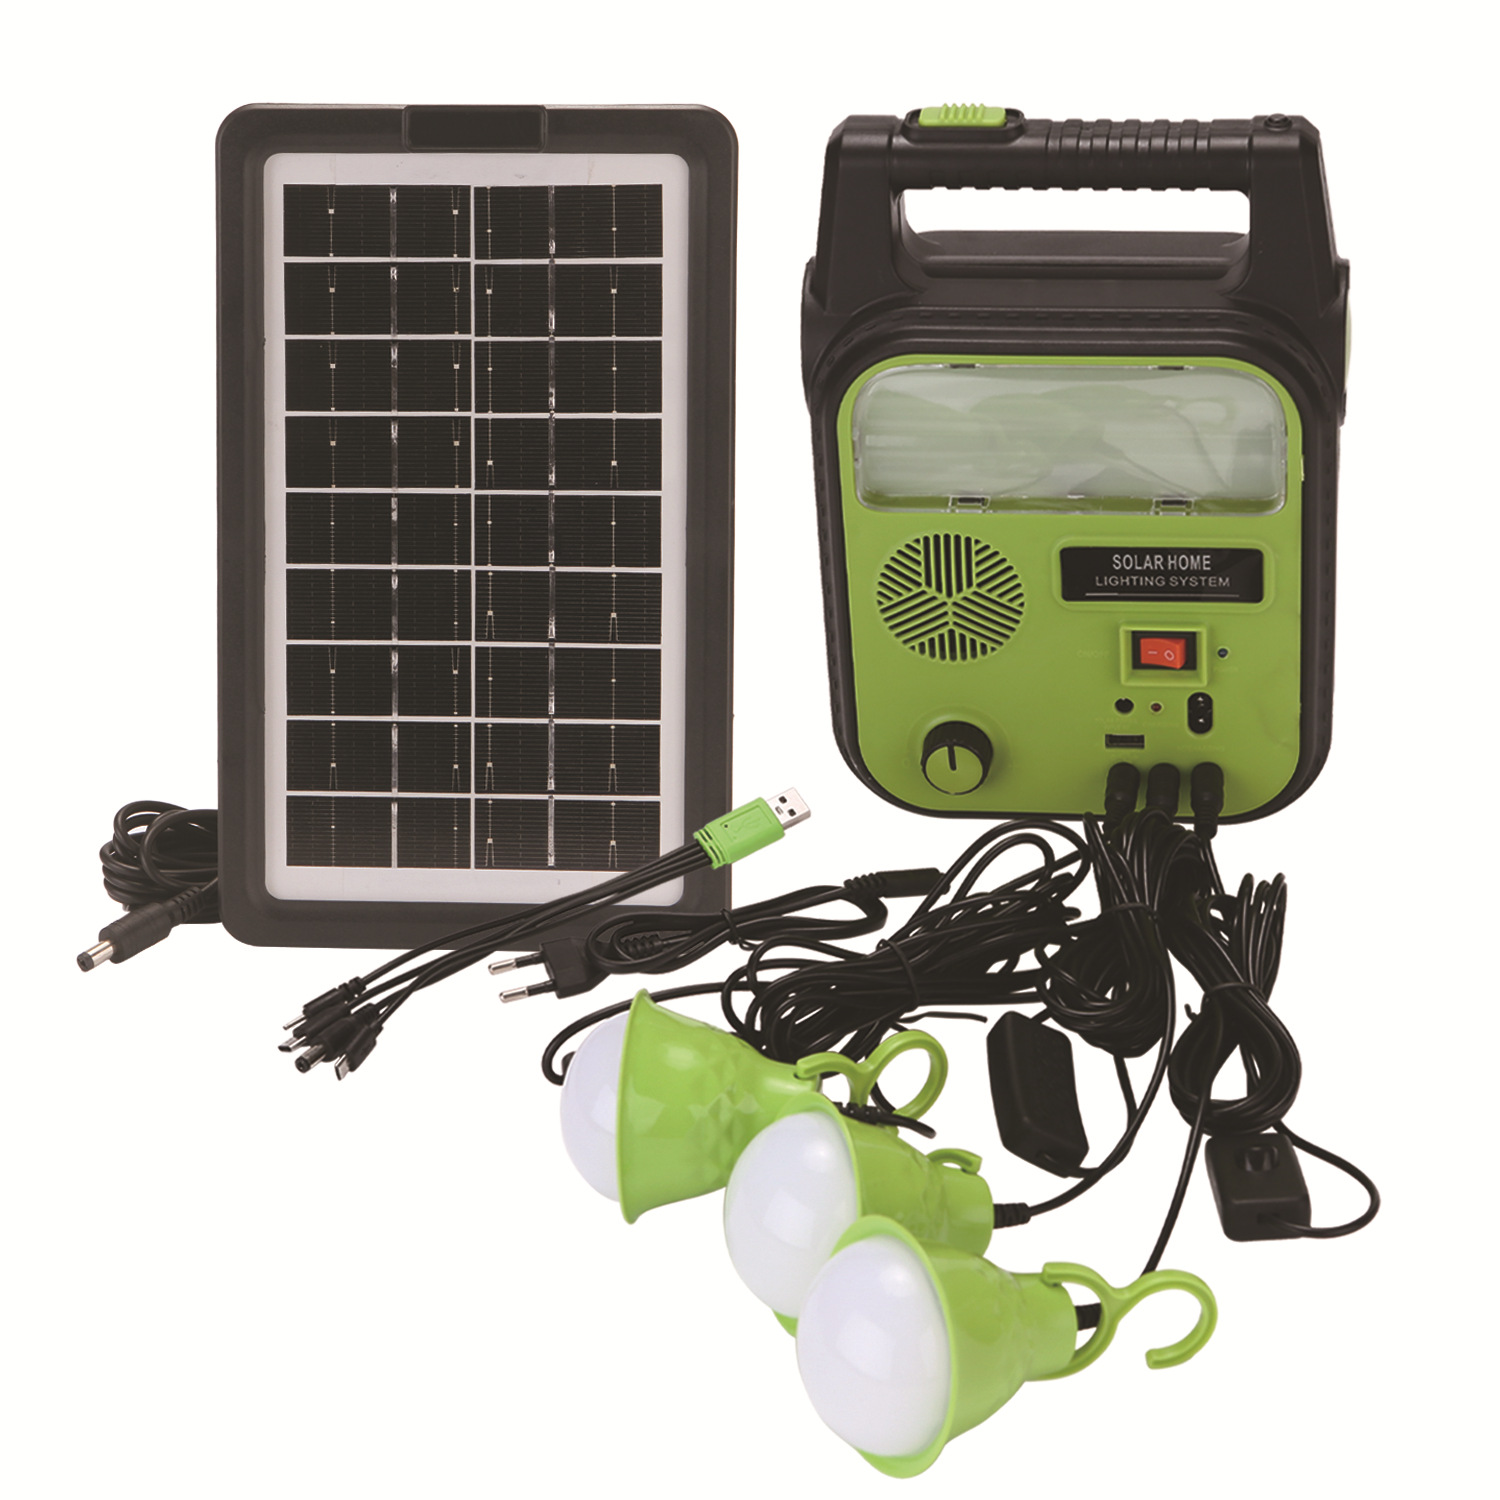 DT-9012 Portable Outdoor Lighting Led Light Solar Lighting System Emergency Charging Probe Camping